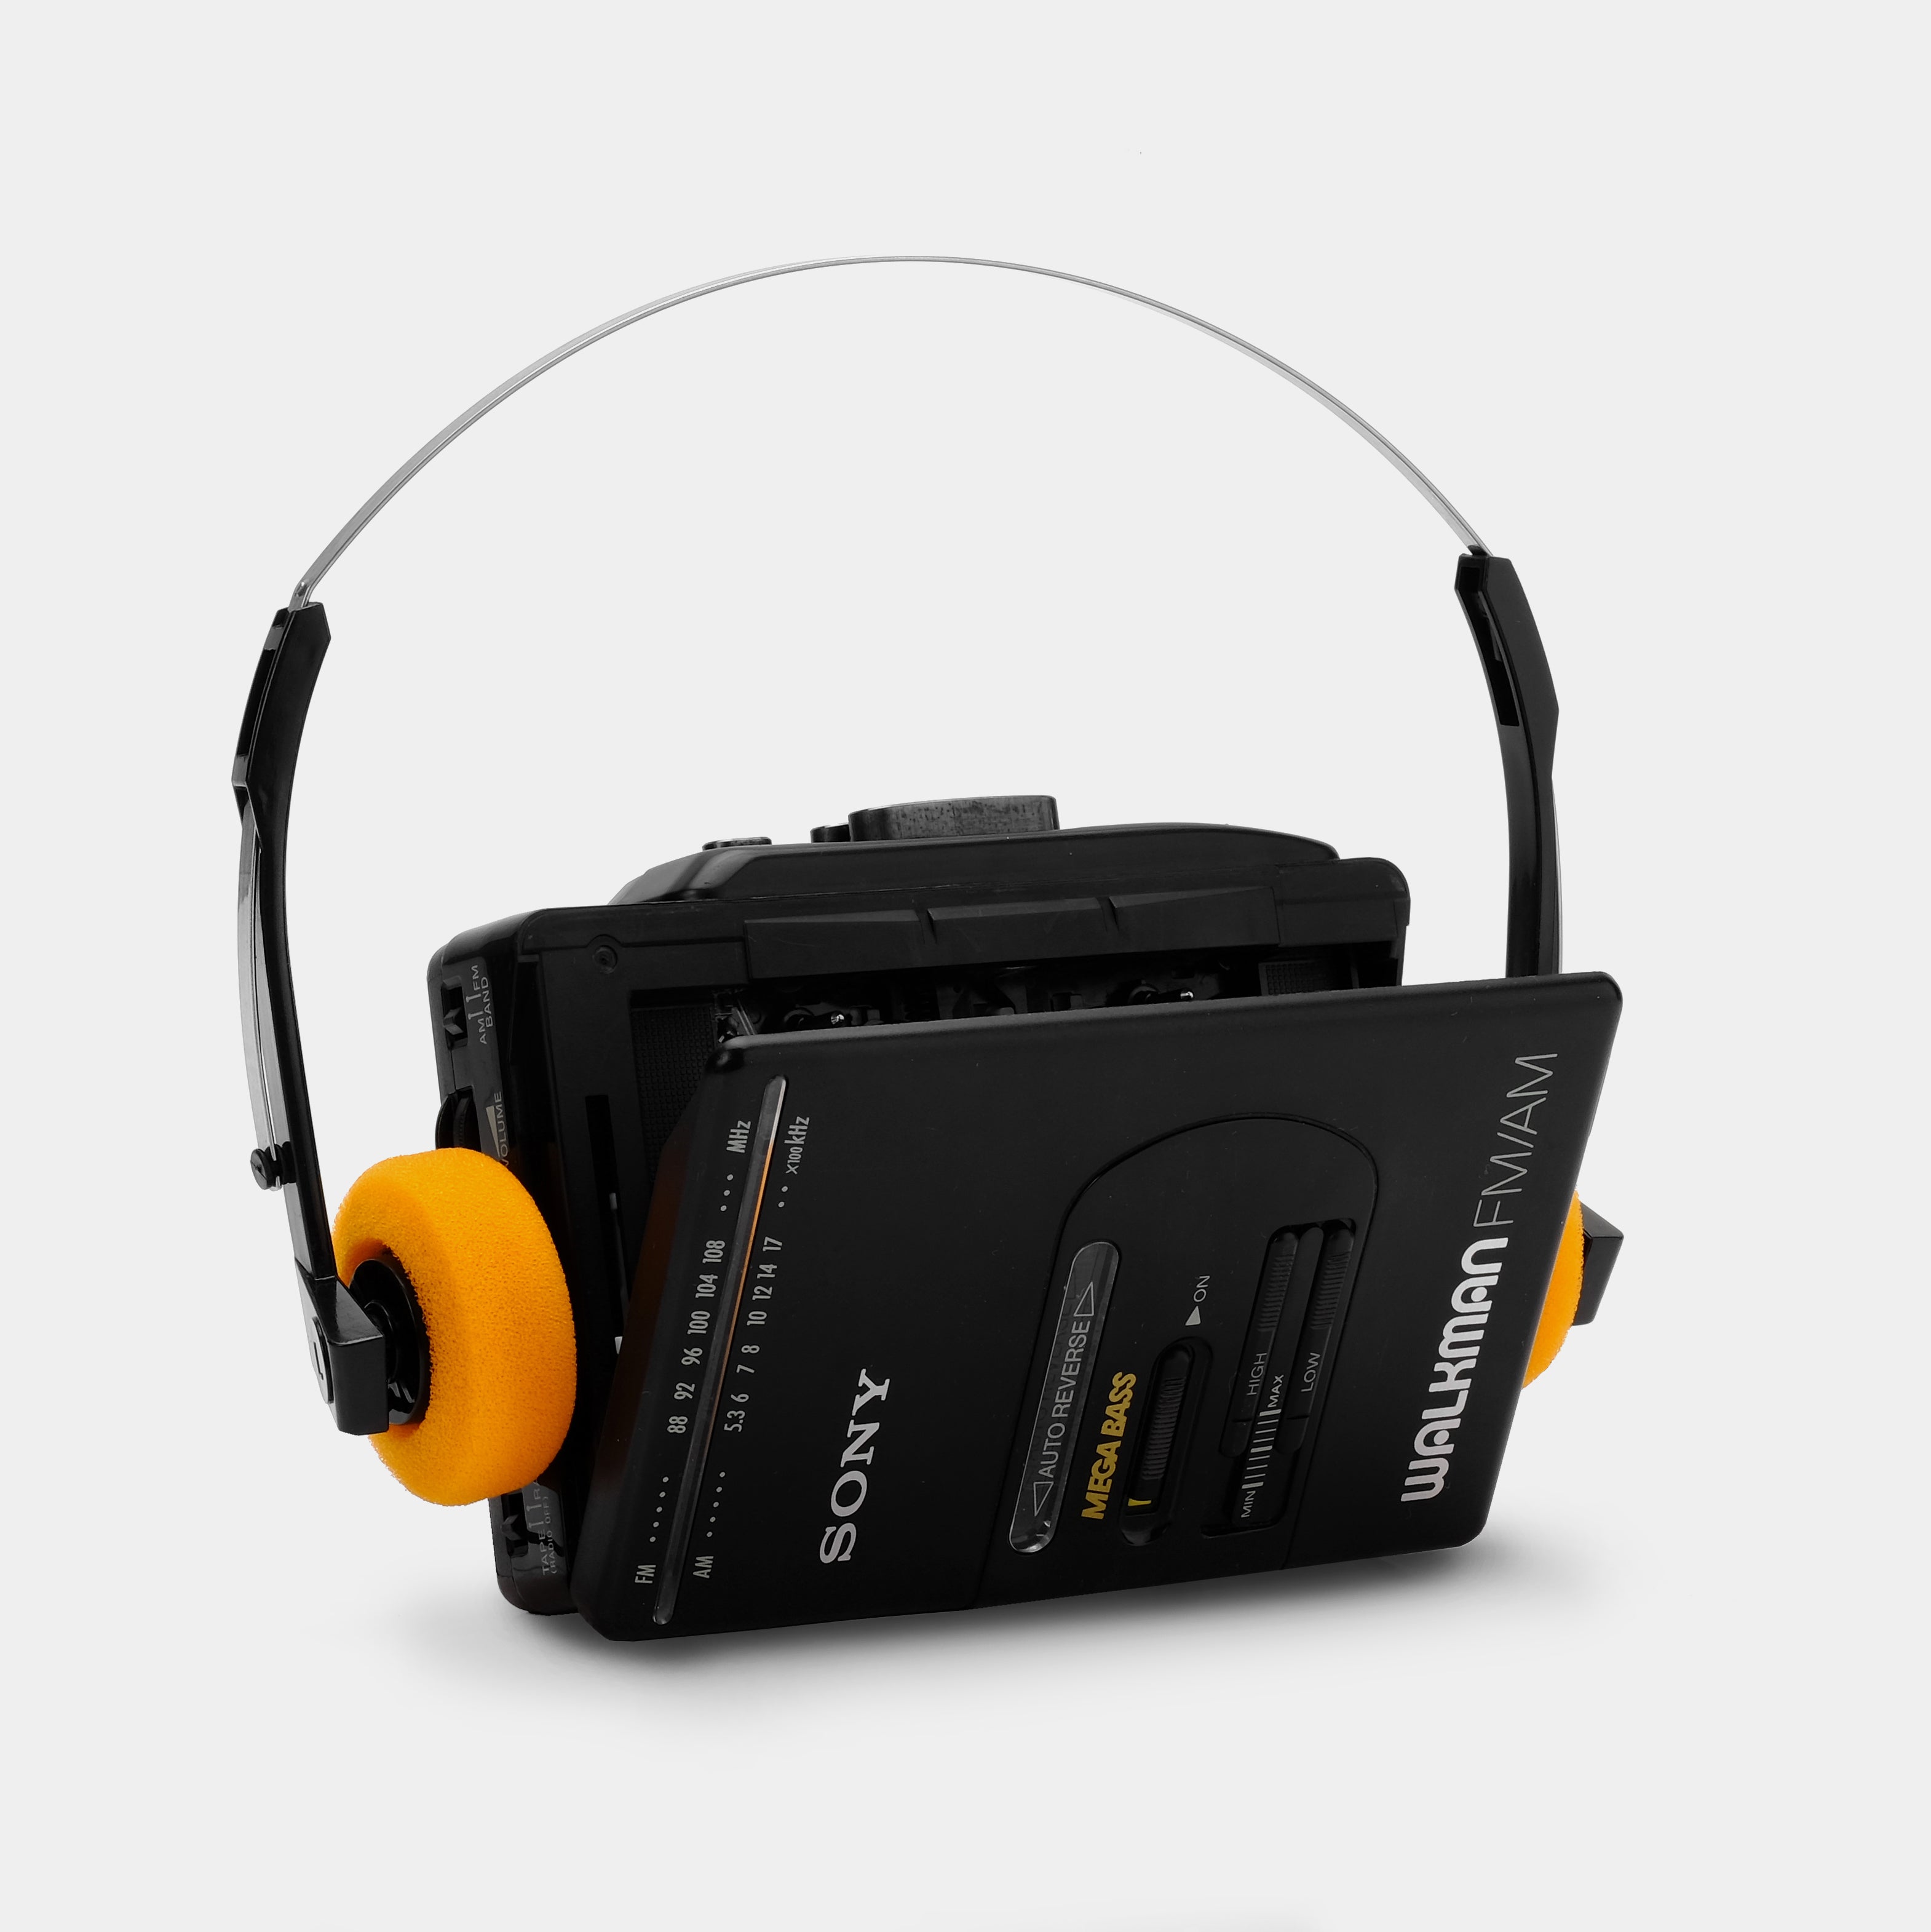 Sony Walkman WM-F2065/F2068 AM/FM Portable Cassette Player